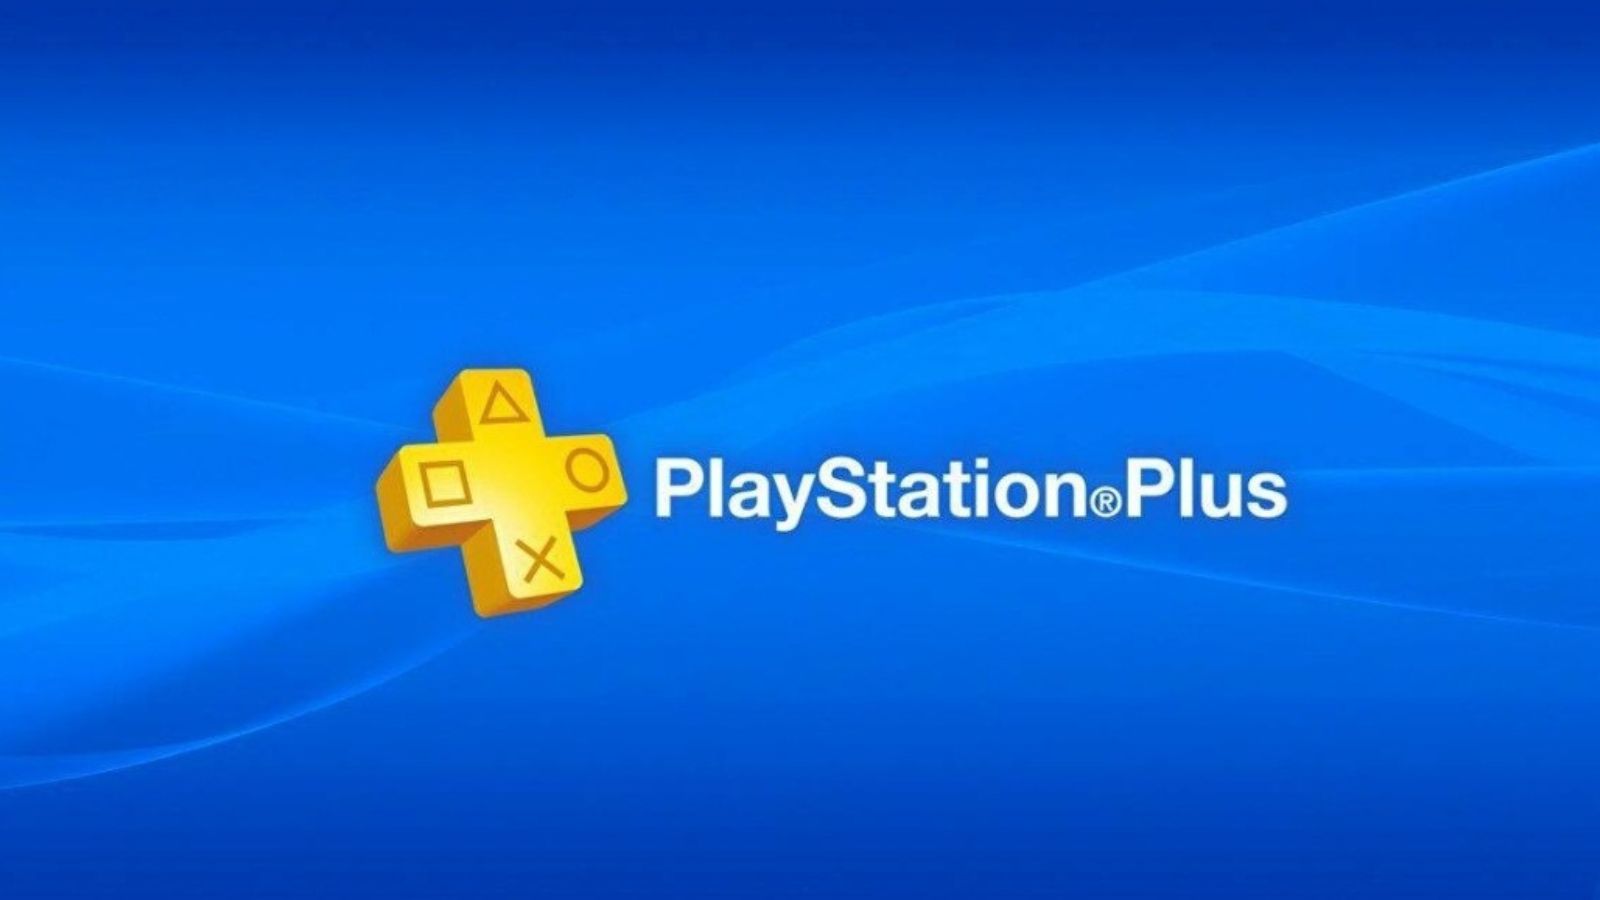 PlayStation Plus giochi luglio annunciati